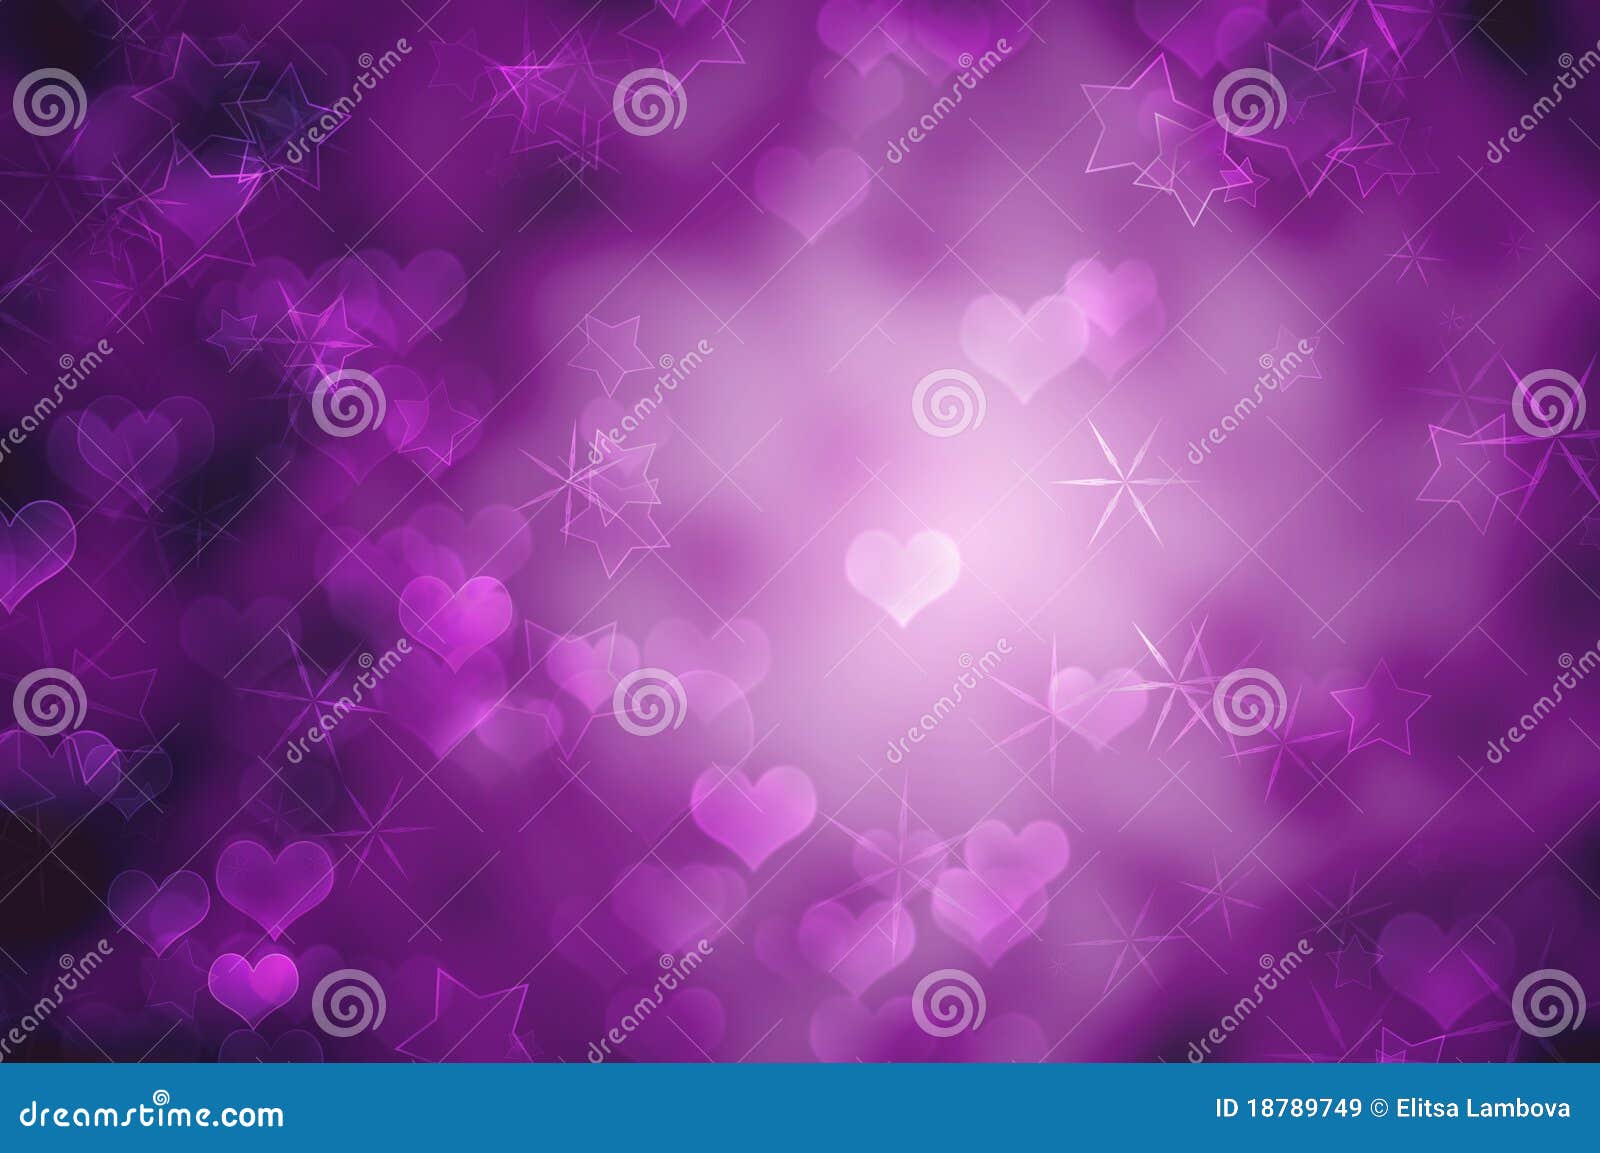 purple romantic background